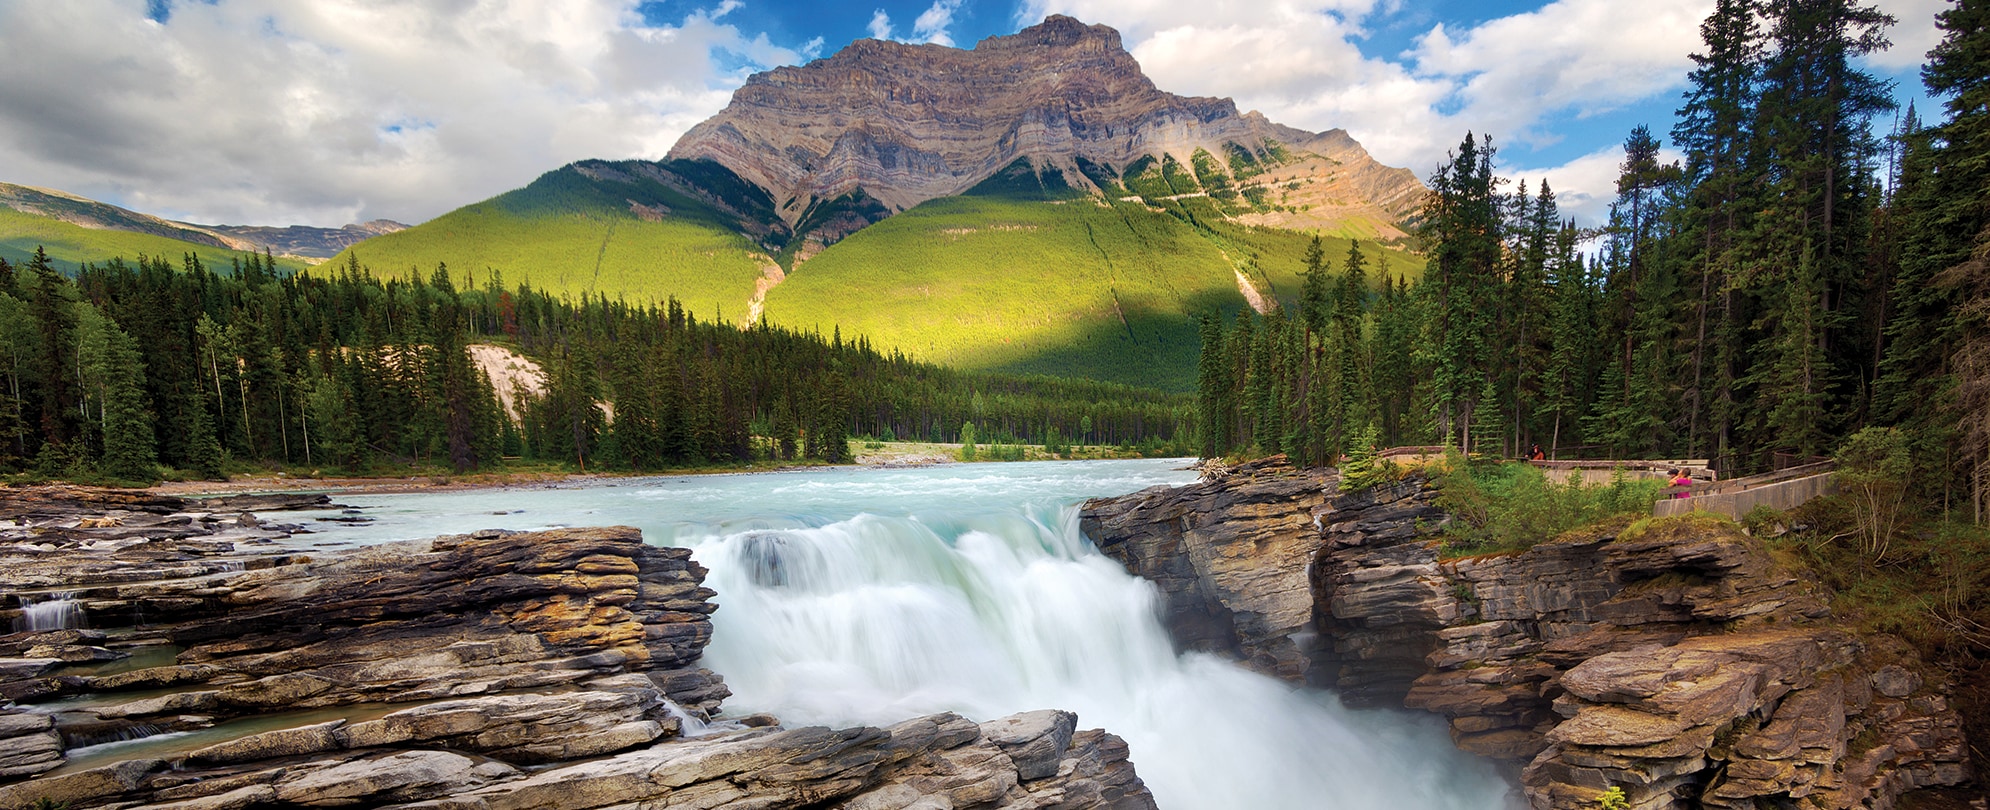 Athabasca Falls at Jasper National Park in Alberta, Canada, during the summer